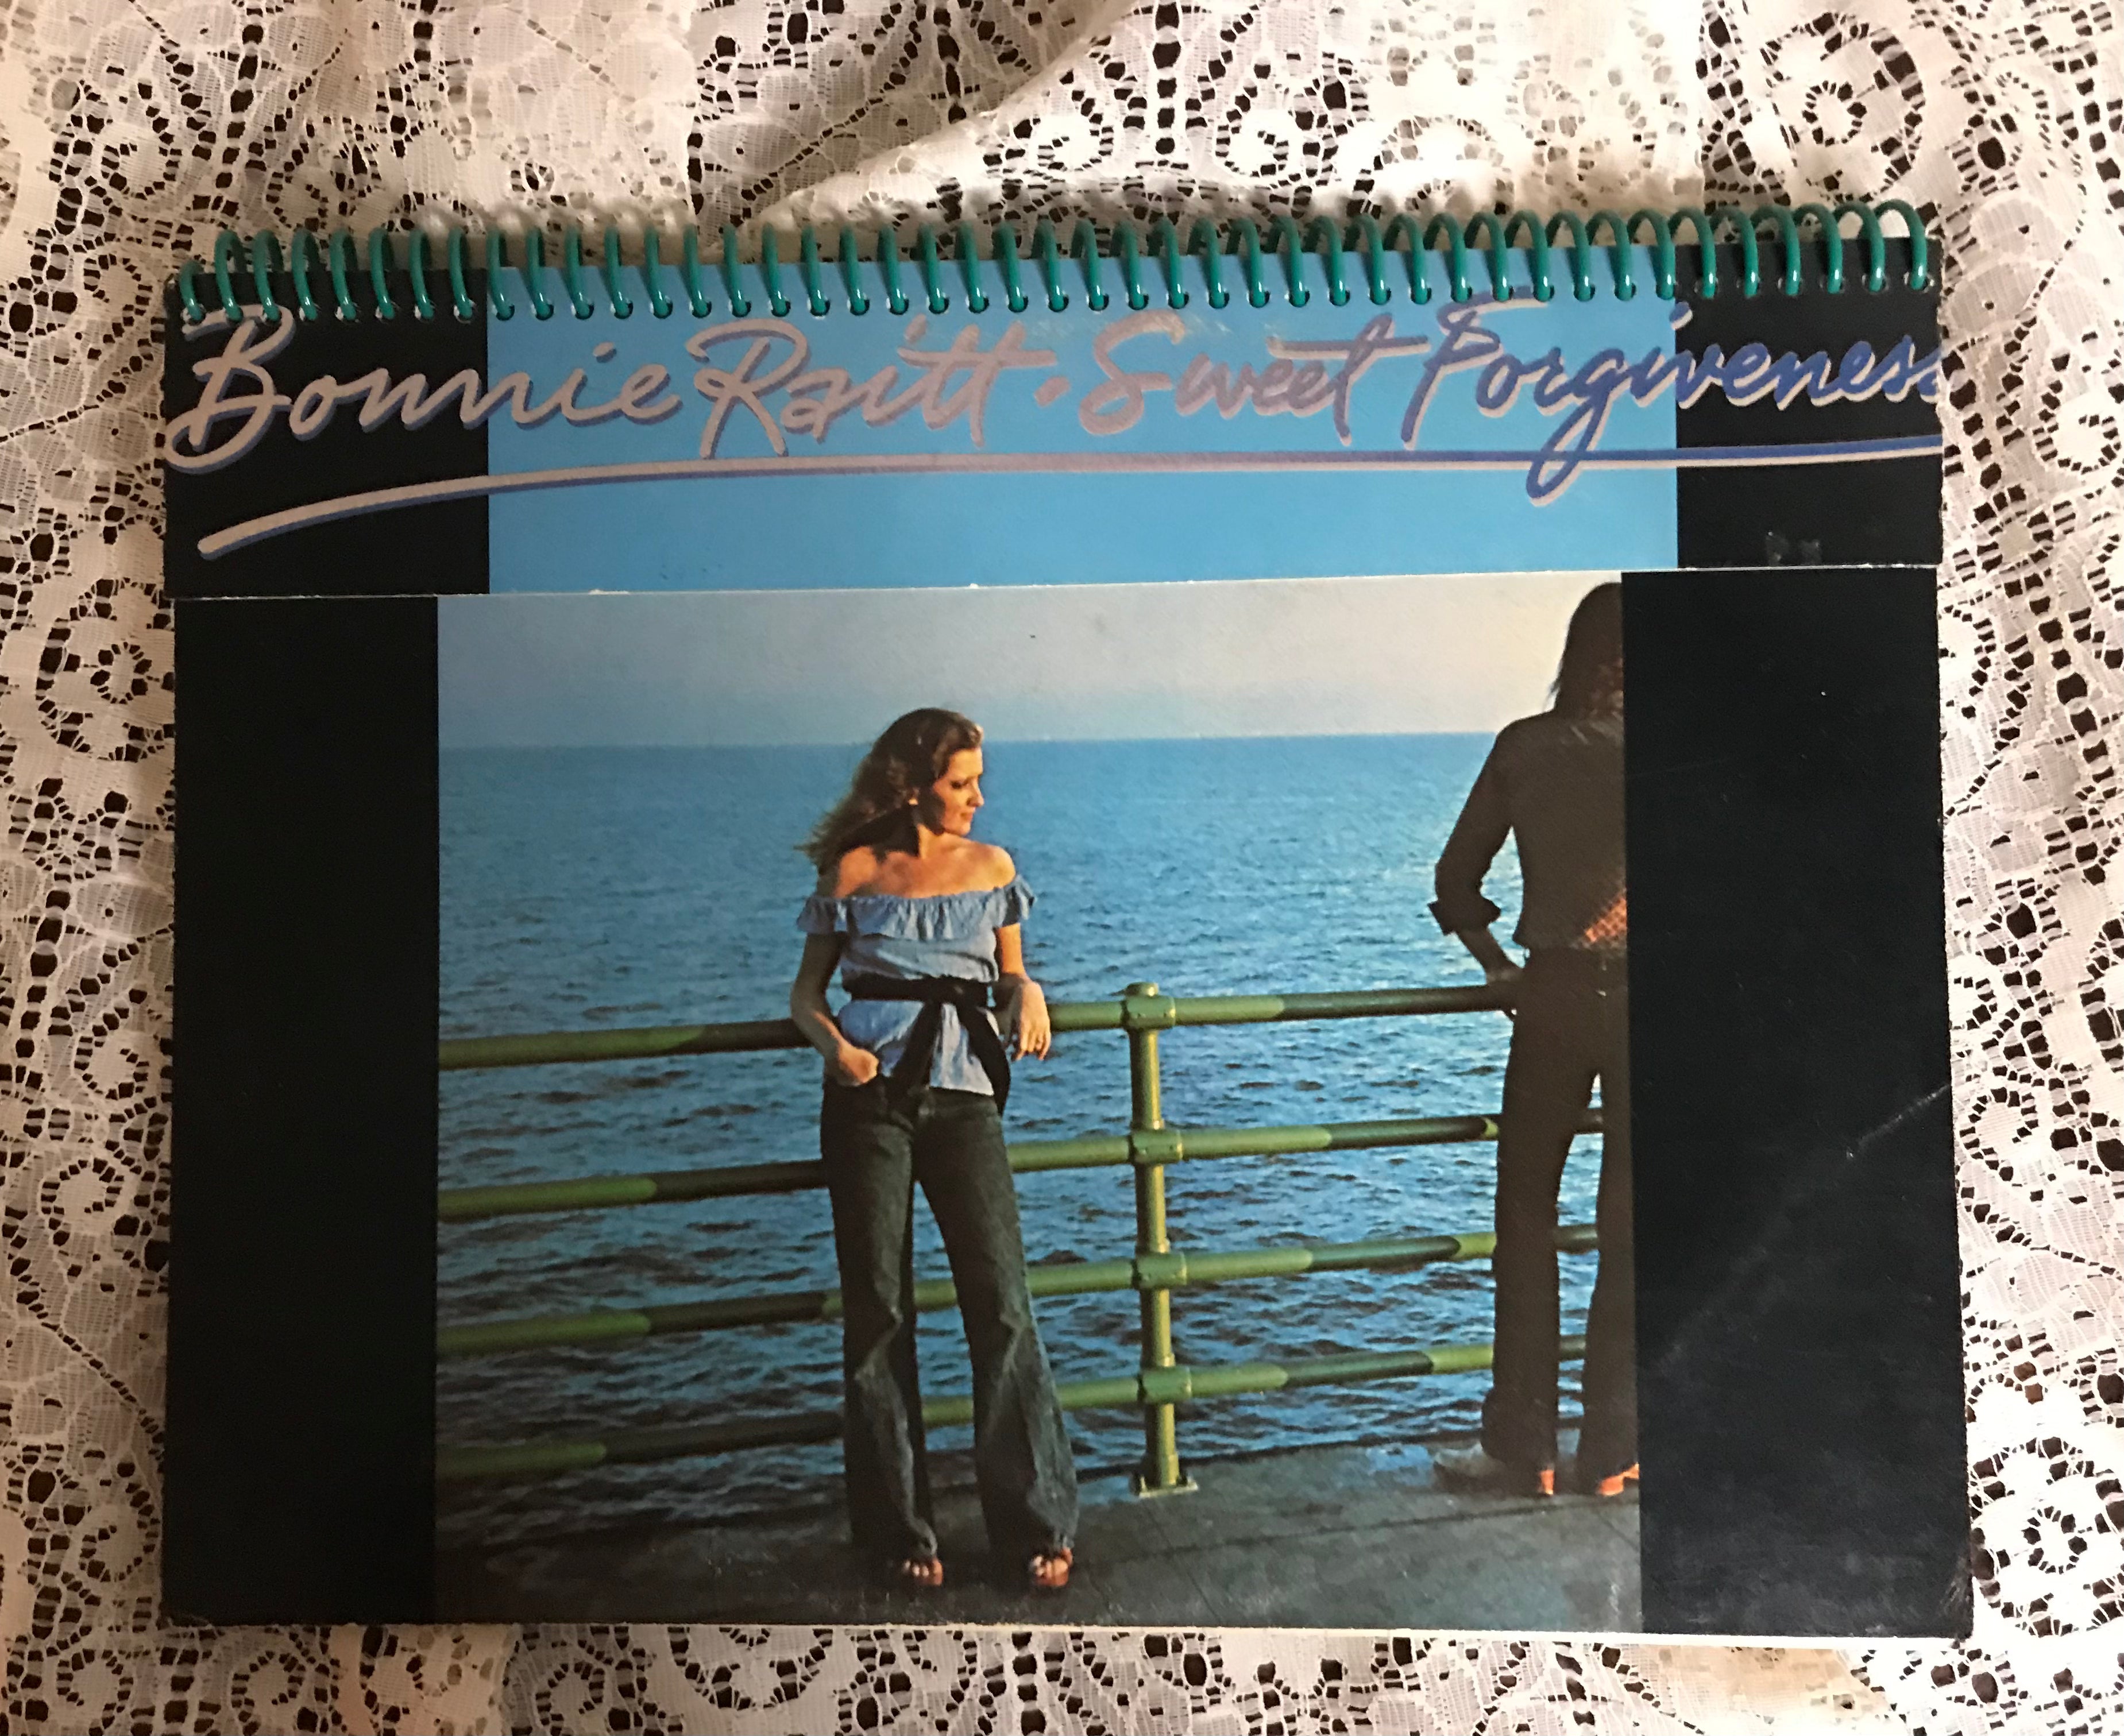 Bonnie Raitt Sweet Forgiveness Album Cover Notebook